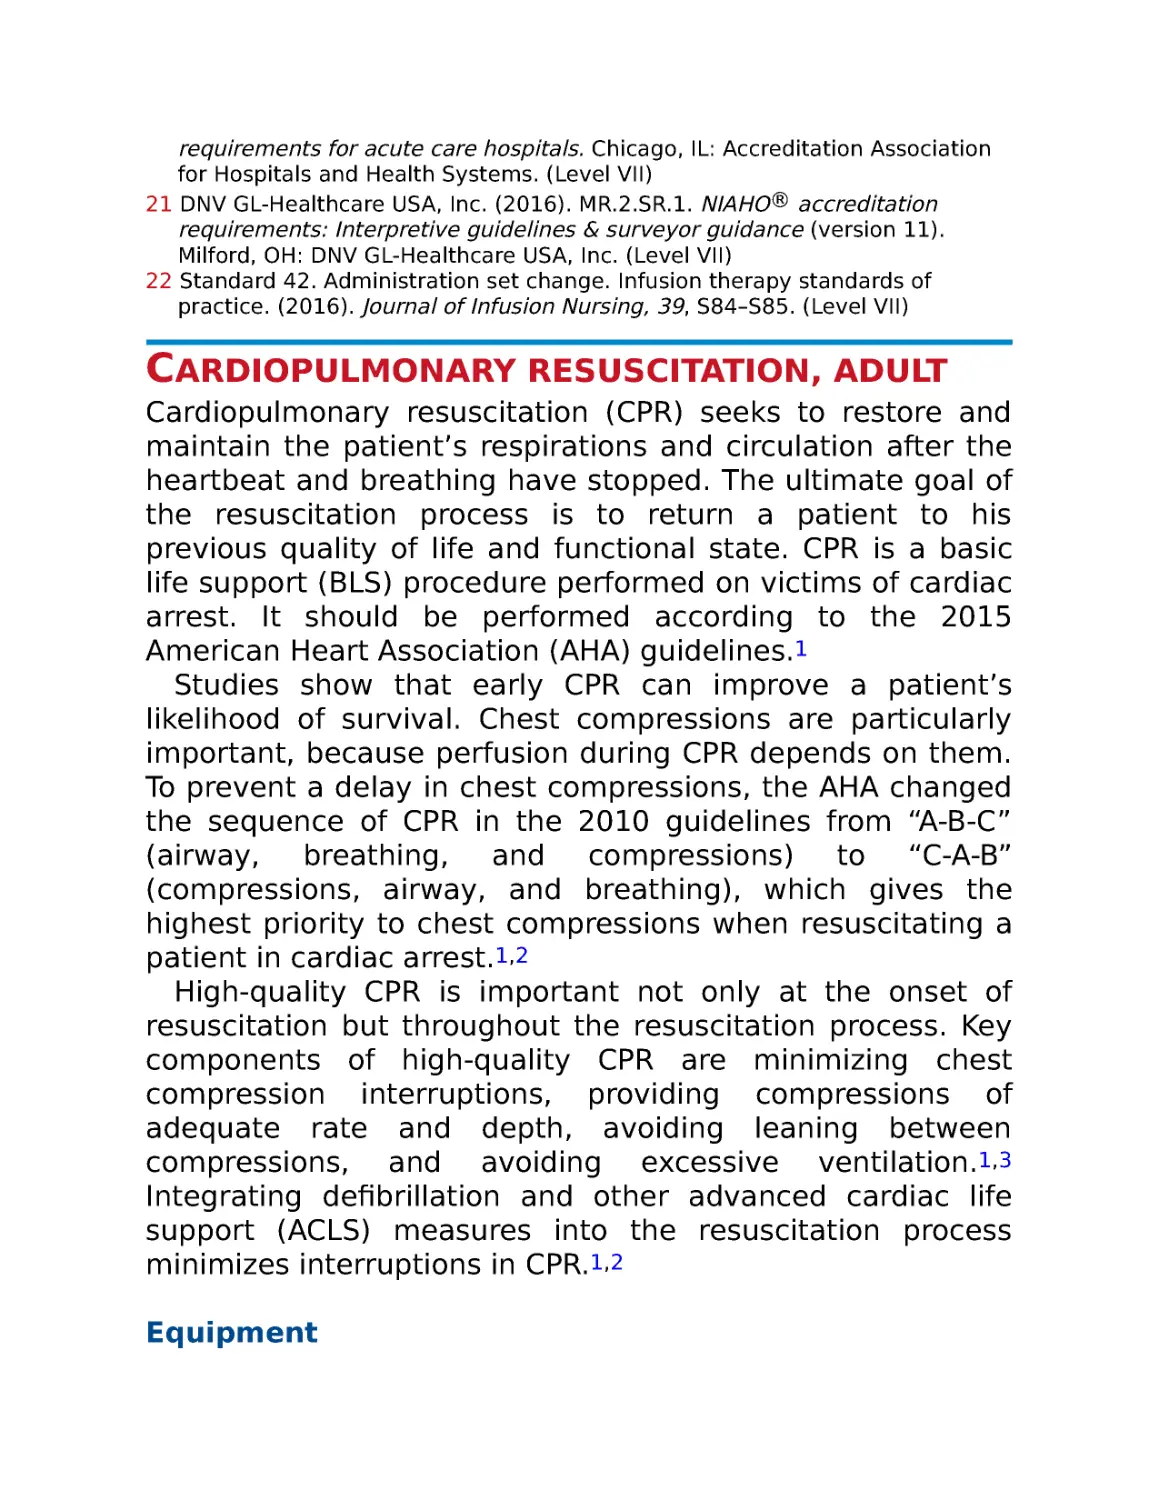 Cardiopulmonary resuscitation, adult